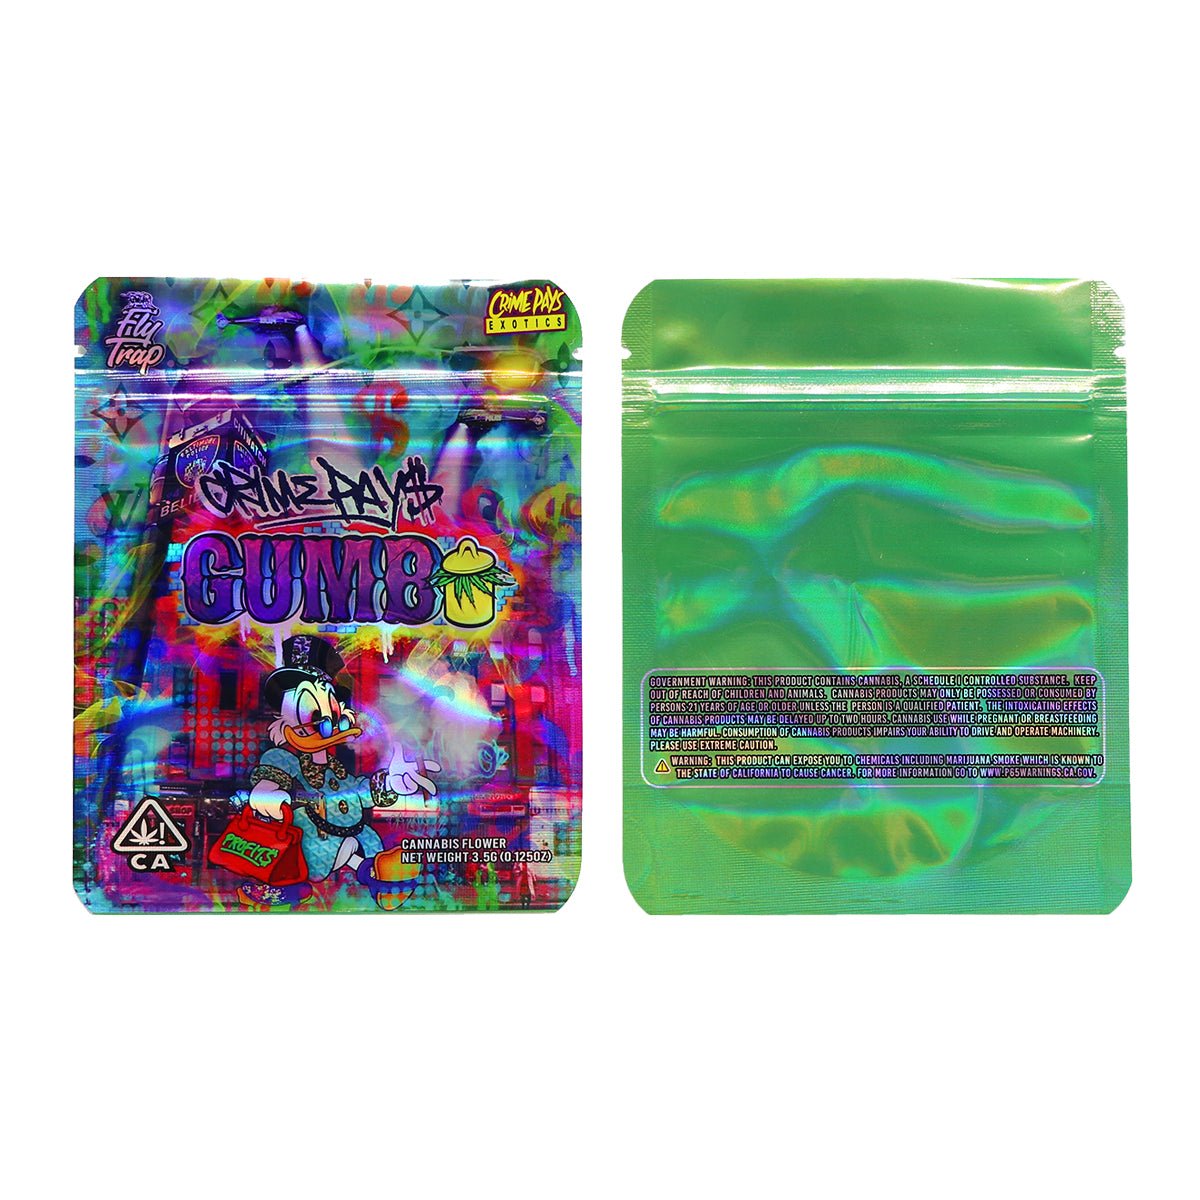 Gumbo Crime Pays Holographic Mylar Bags 3.5 Grams - Custom 420 bagPackaging & Storage